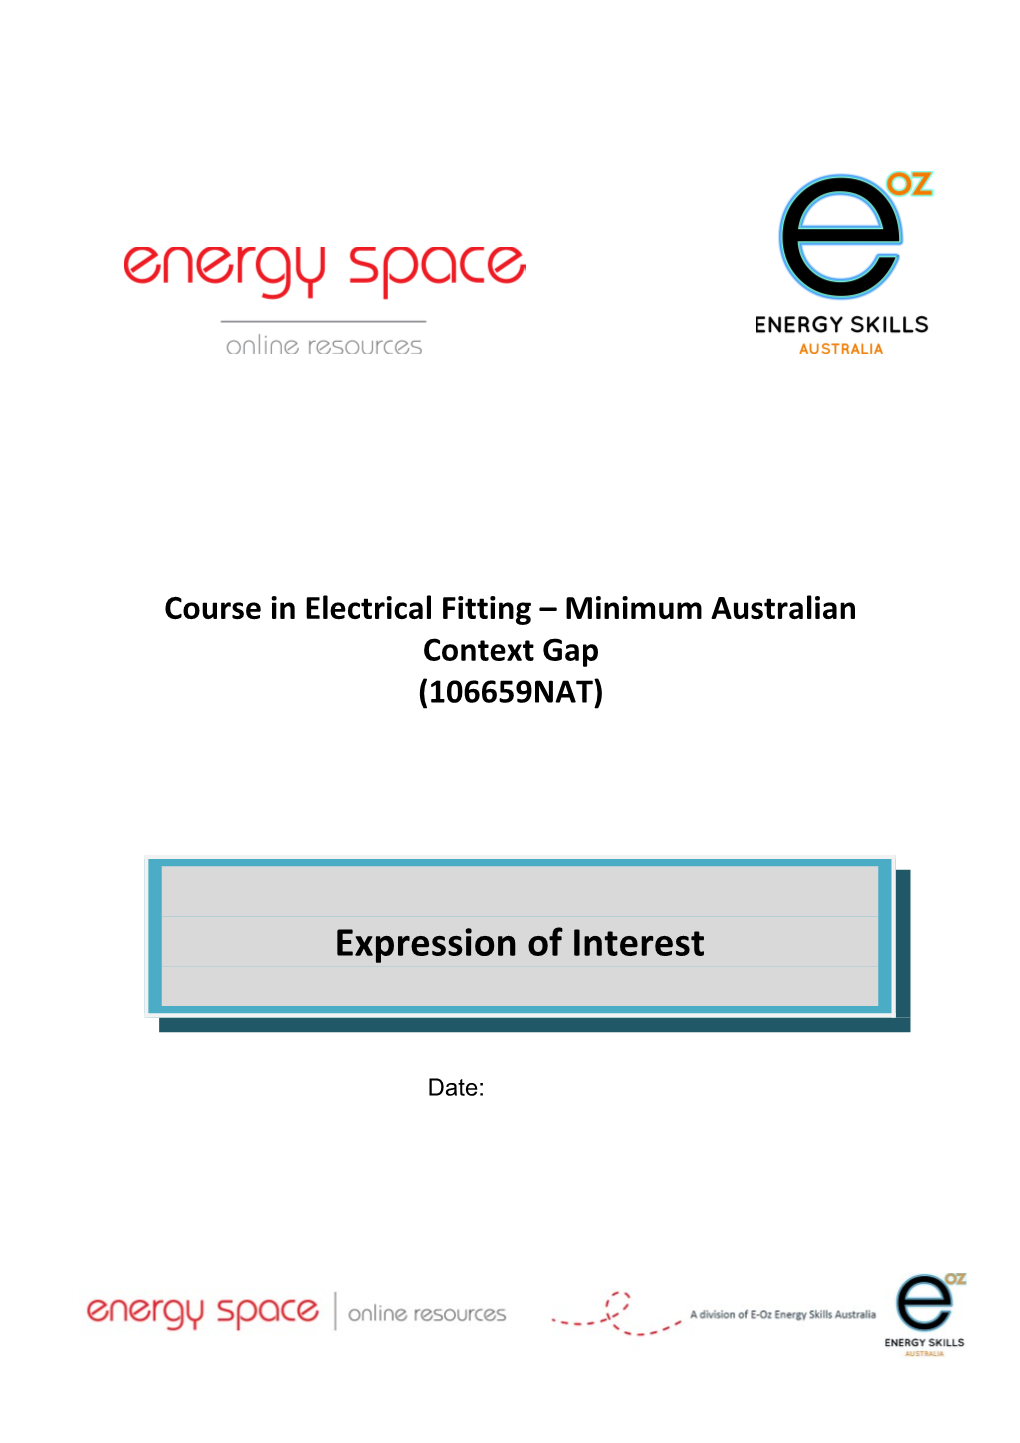 Course in Electrical Fitting Minimum Australian Context Gap